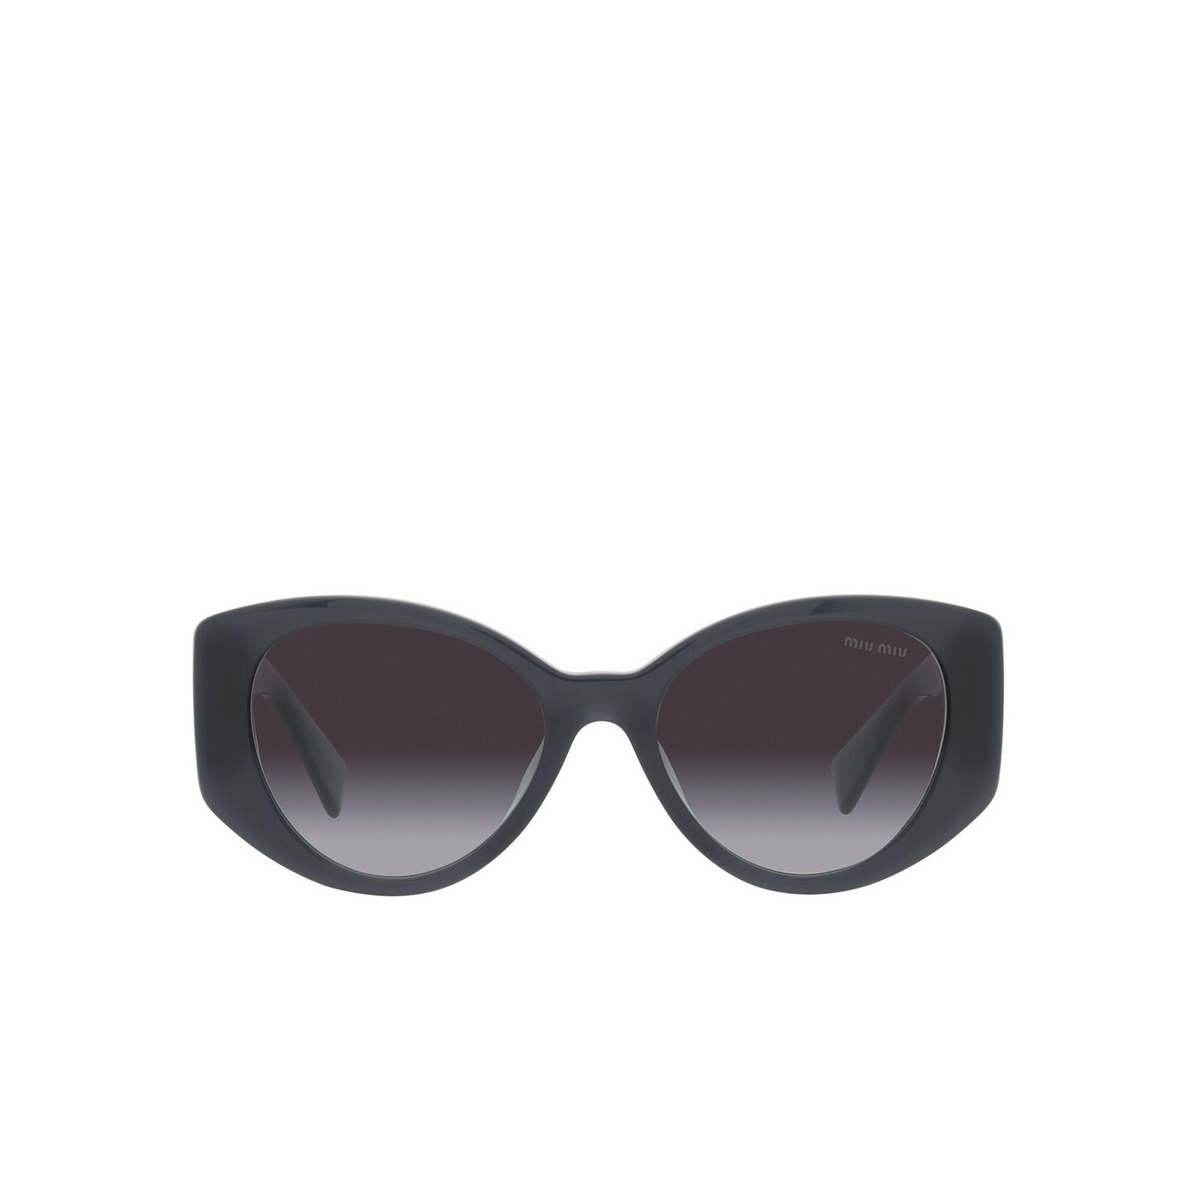 Miu Miu® Cat-eye Sunglasses: MU 03WS color Grey Opal 06U5D1 - front view.